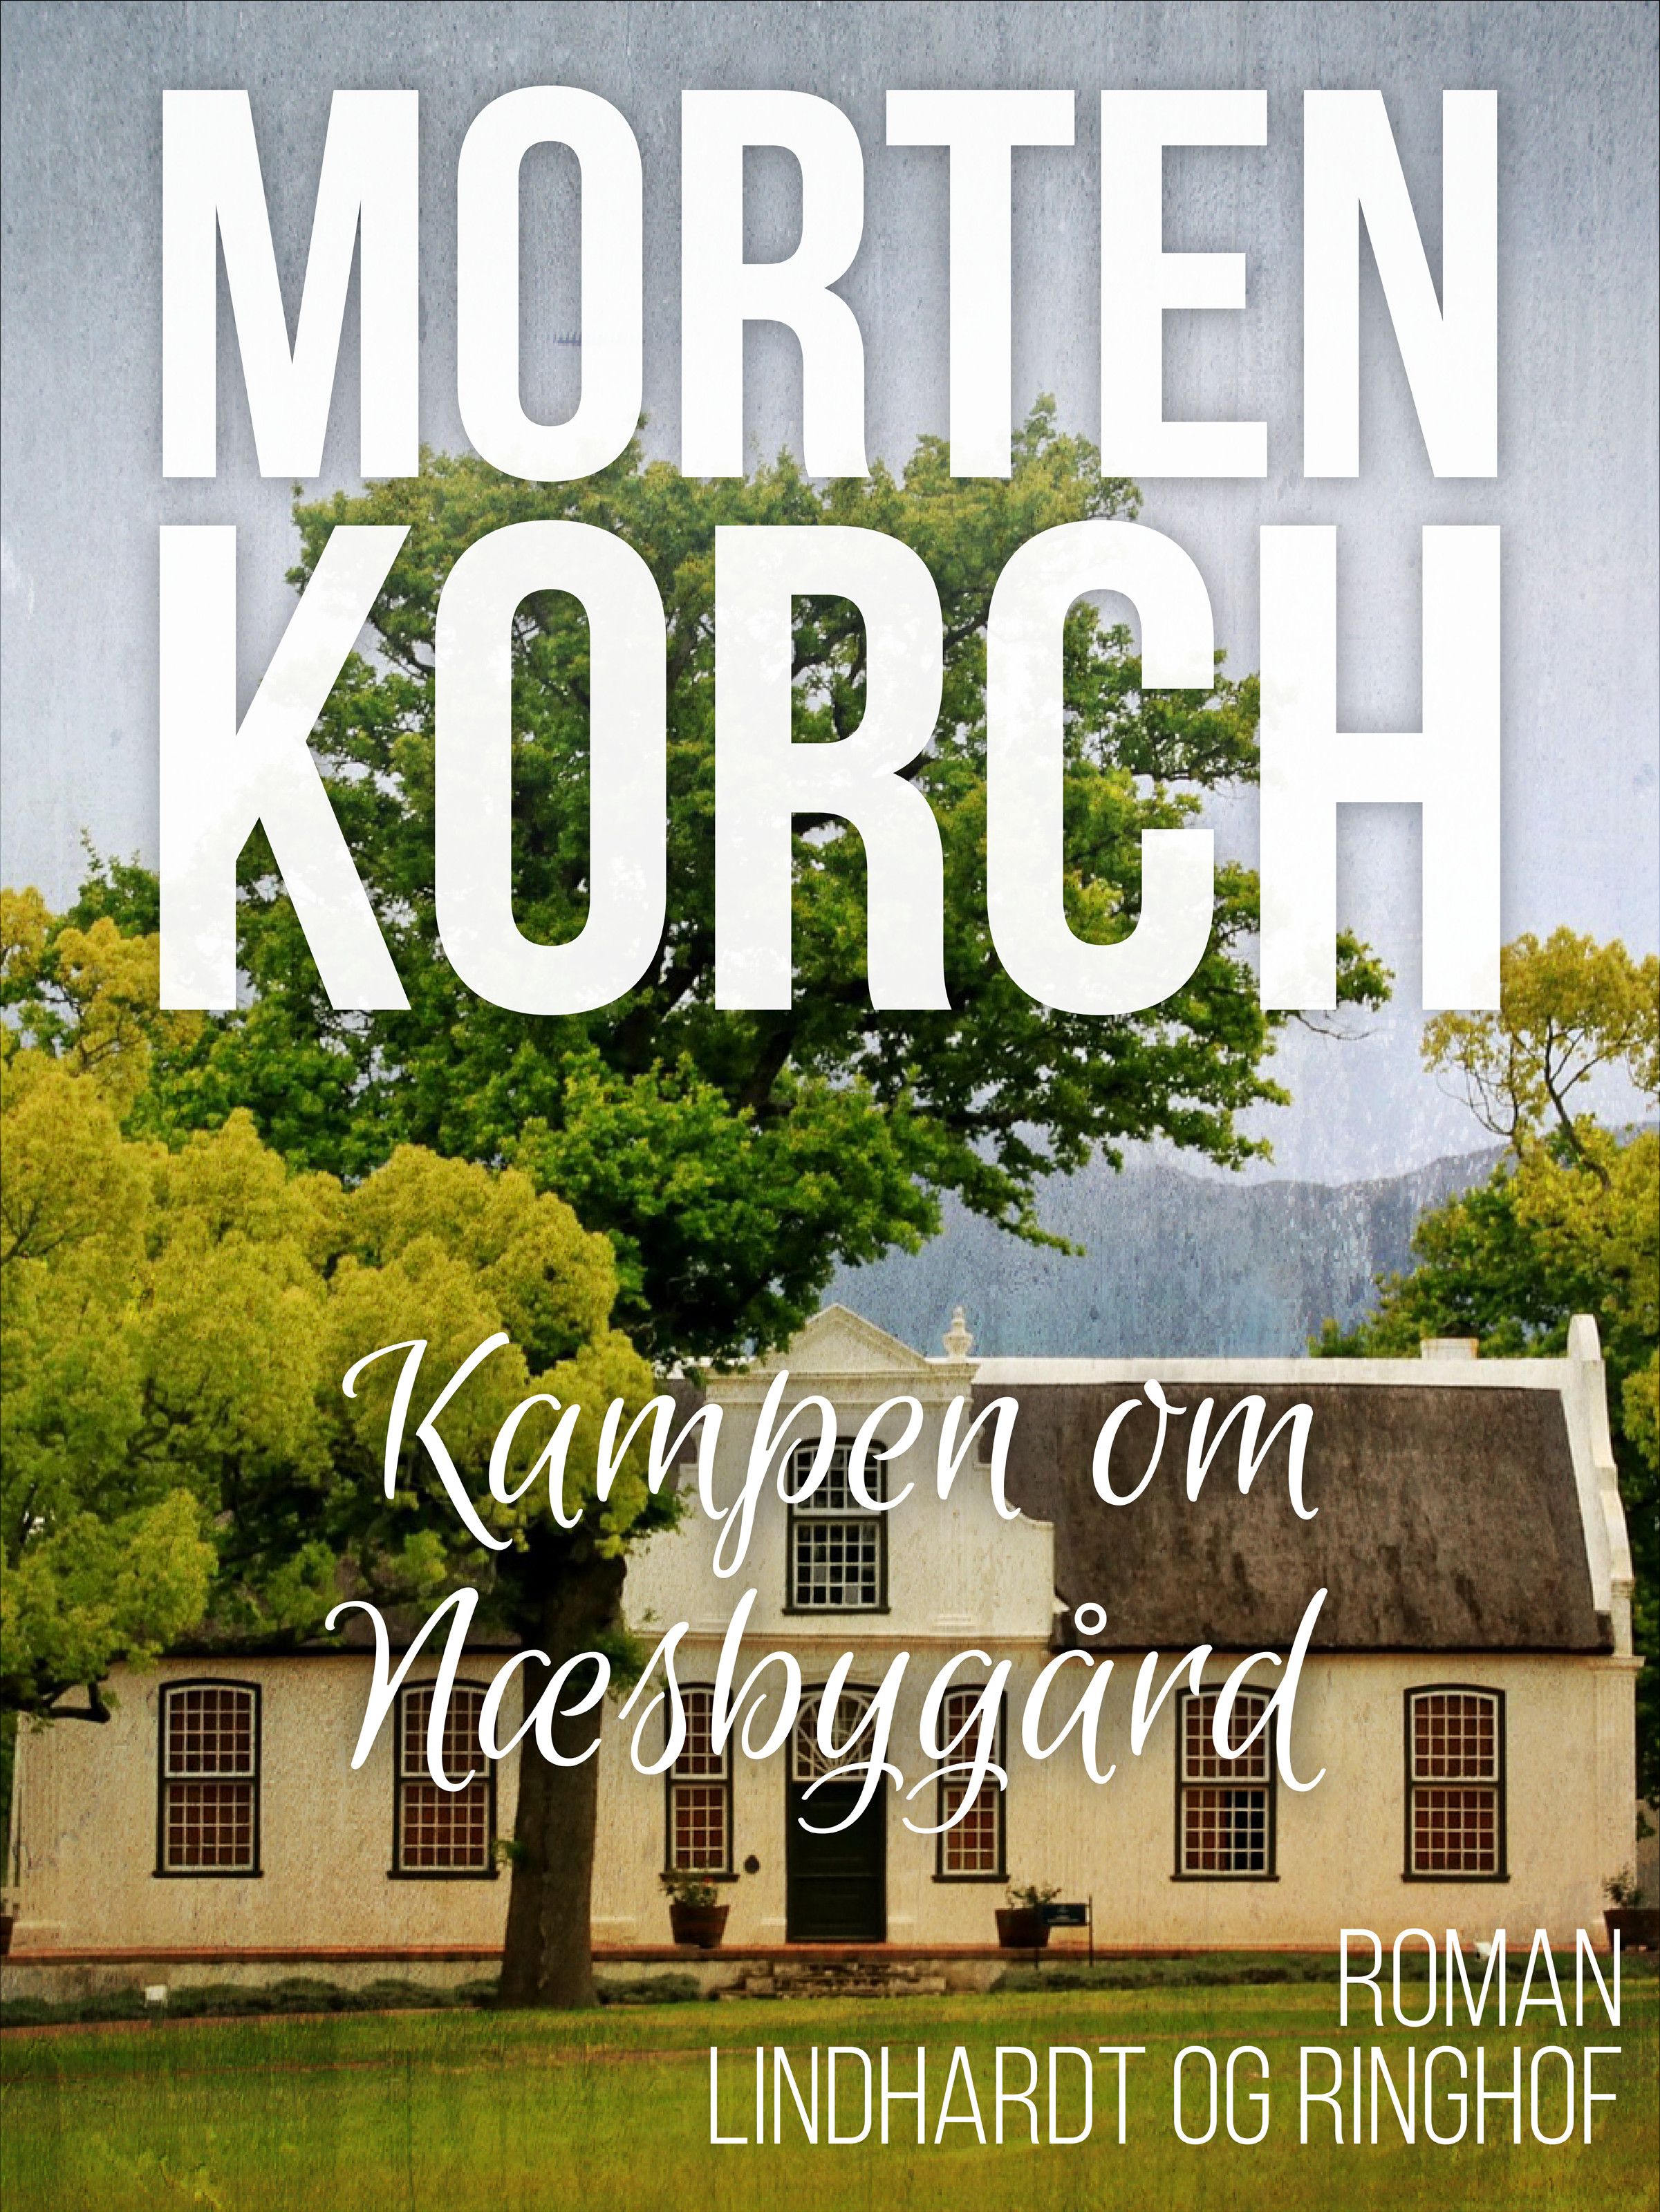 Kampen om Næsbygård, audiobook by Morten Korch